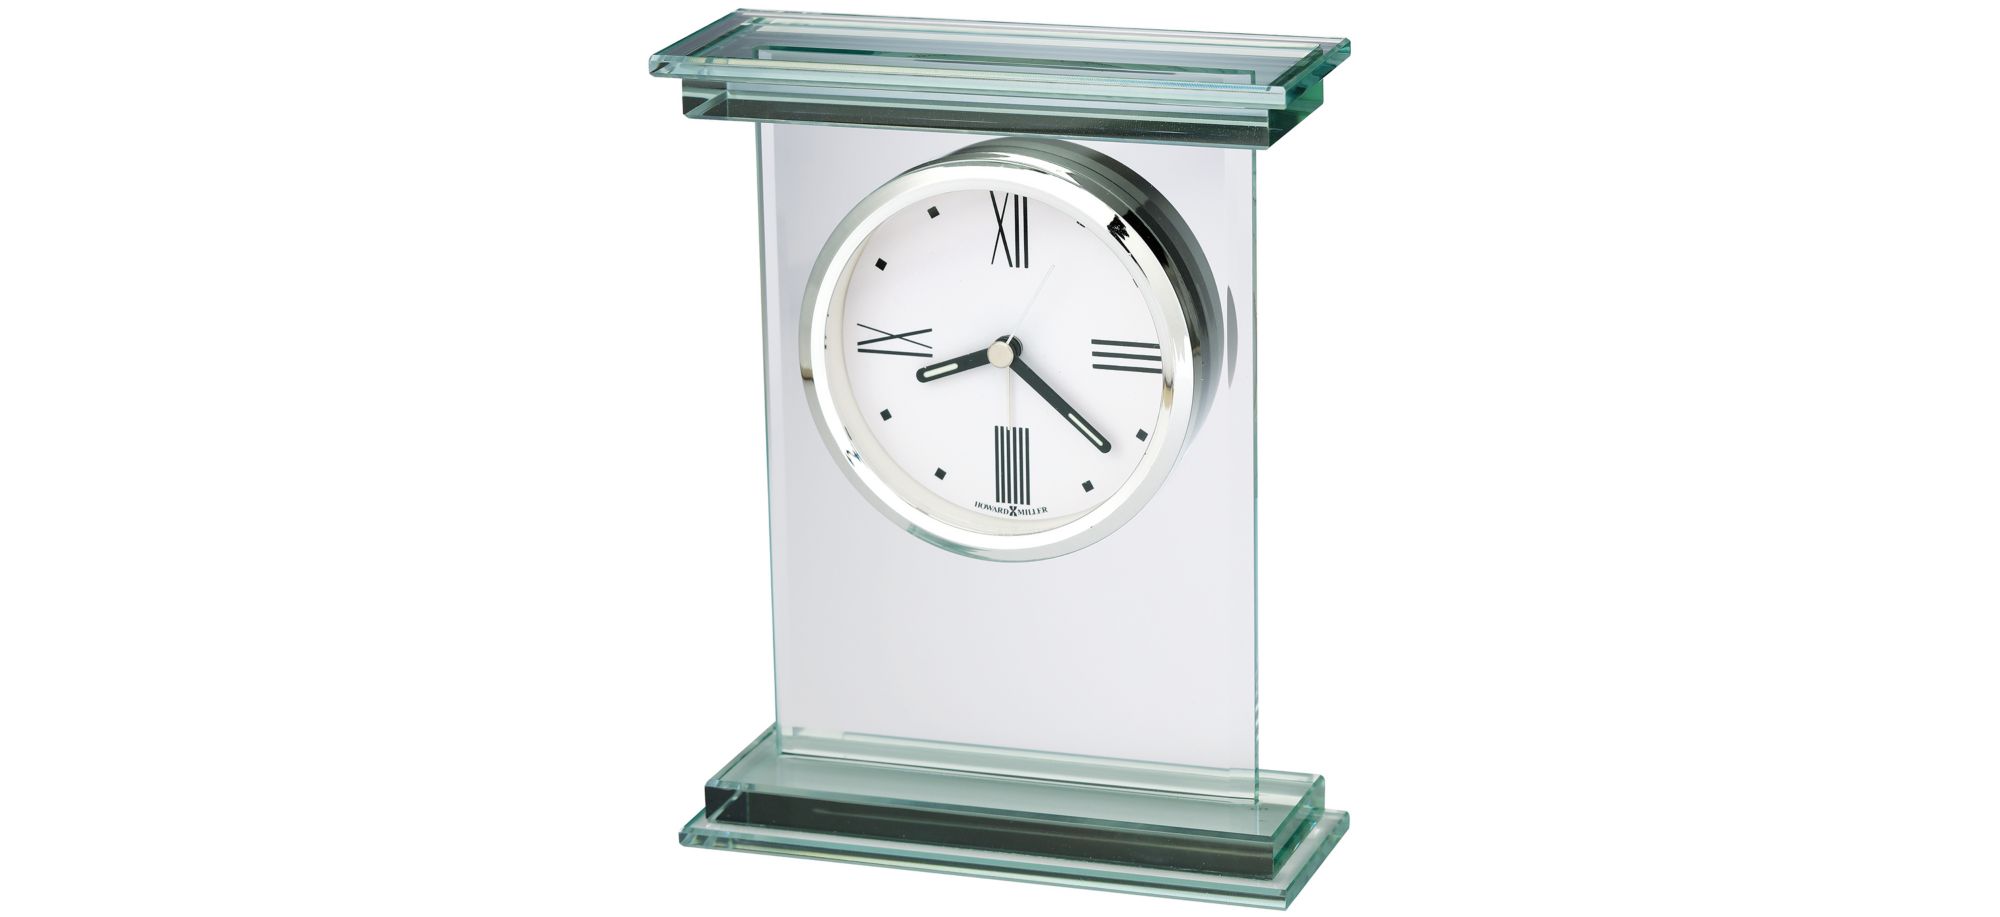 Hightower Tabletop Clock in Silver by Howard Miller